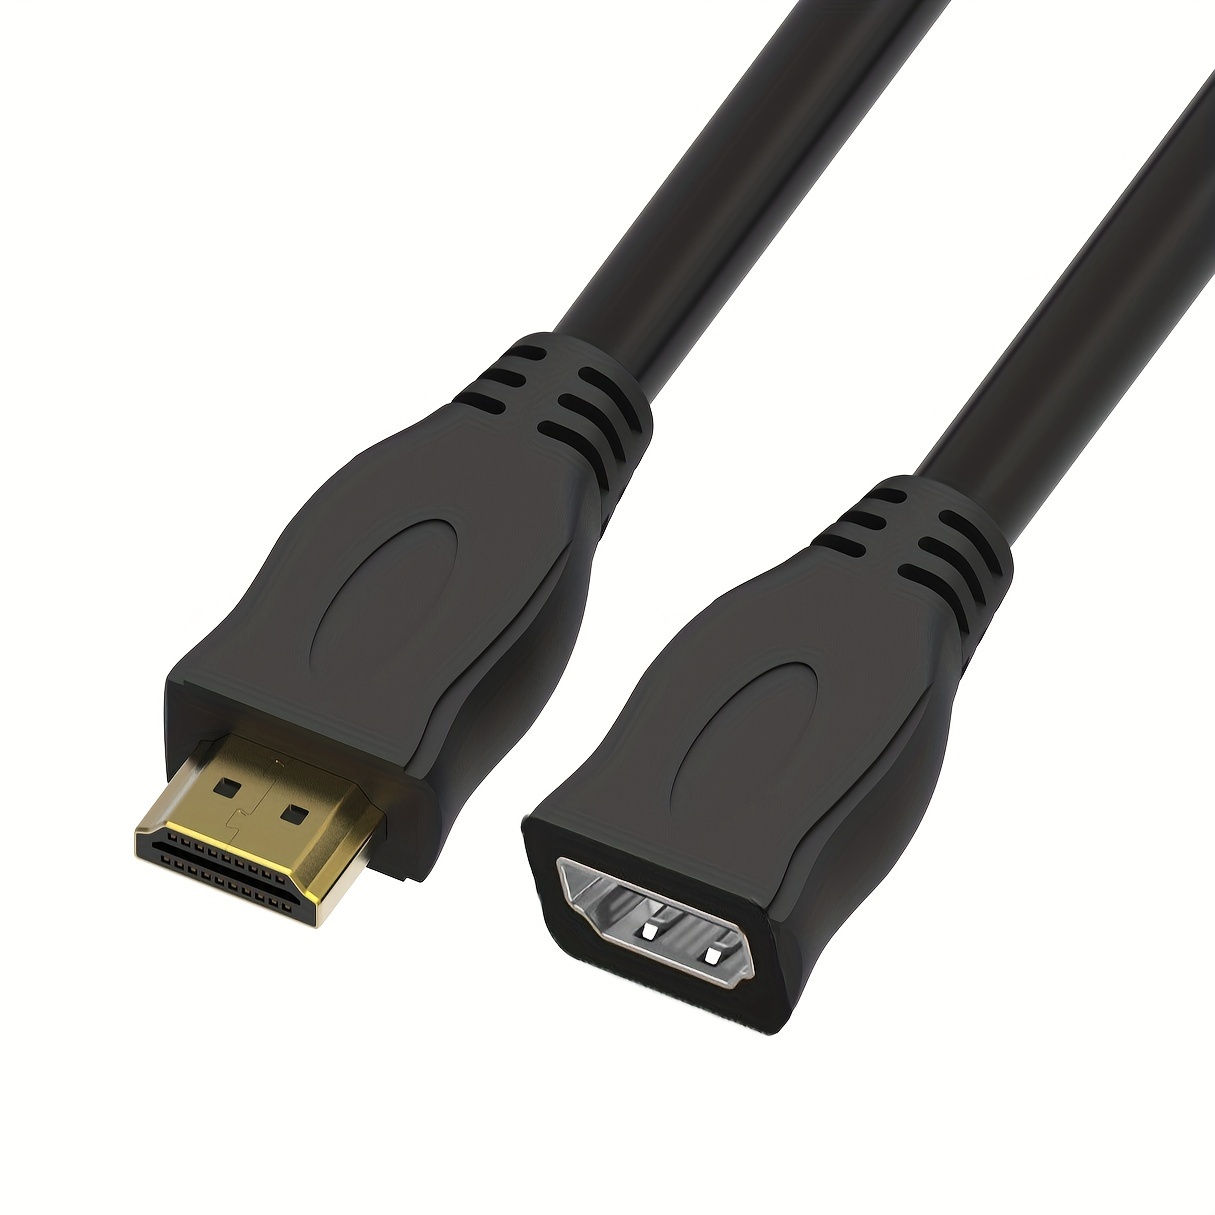 Cable de extensión HDMI VCE, adaptador macho a hembra, extensor HDMI corto  compatible con 4K y 3D, compatible con Google Chrome Cast, Roku Stick,  HDTV, portátil y PC